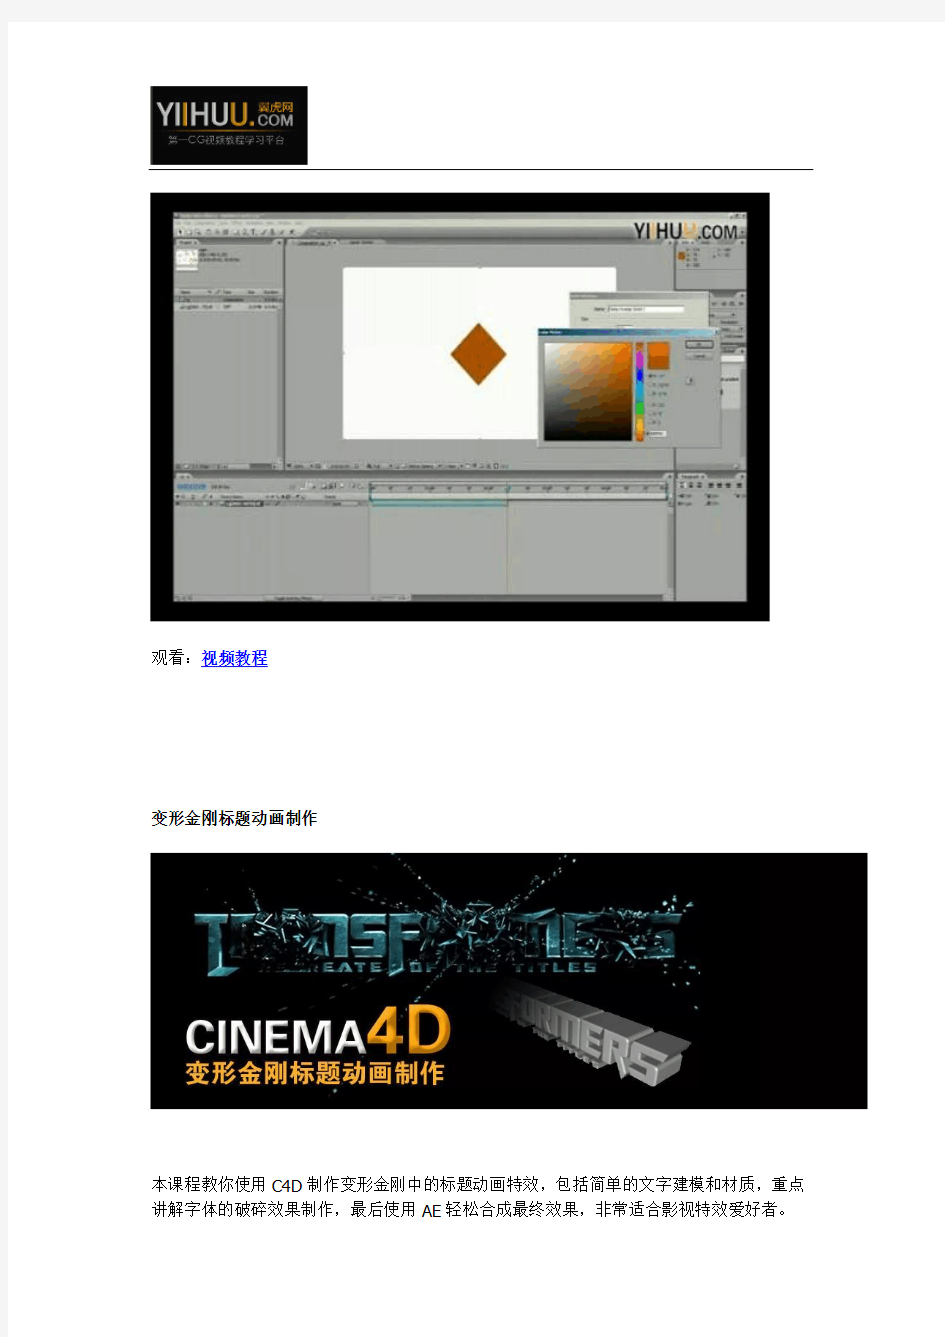 Cinema 4D教程——创建风格logo动画&变形金刚标题动画制作